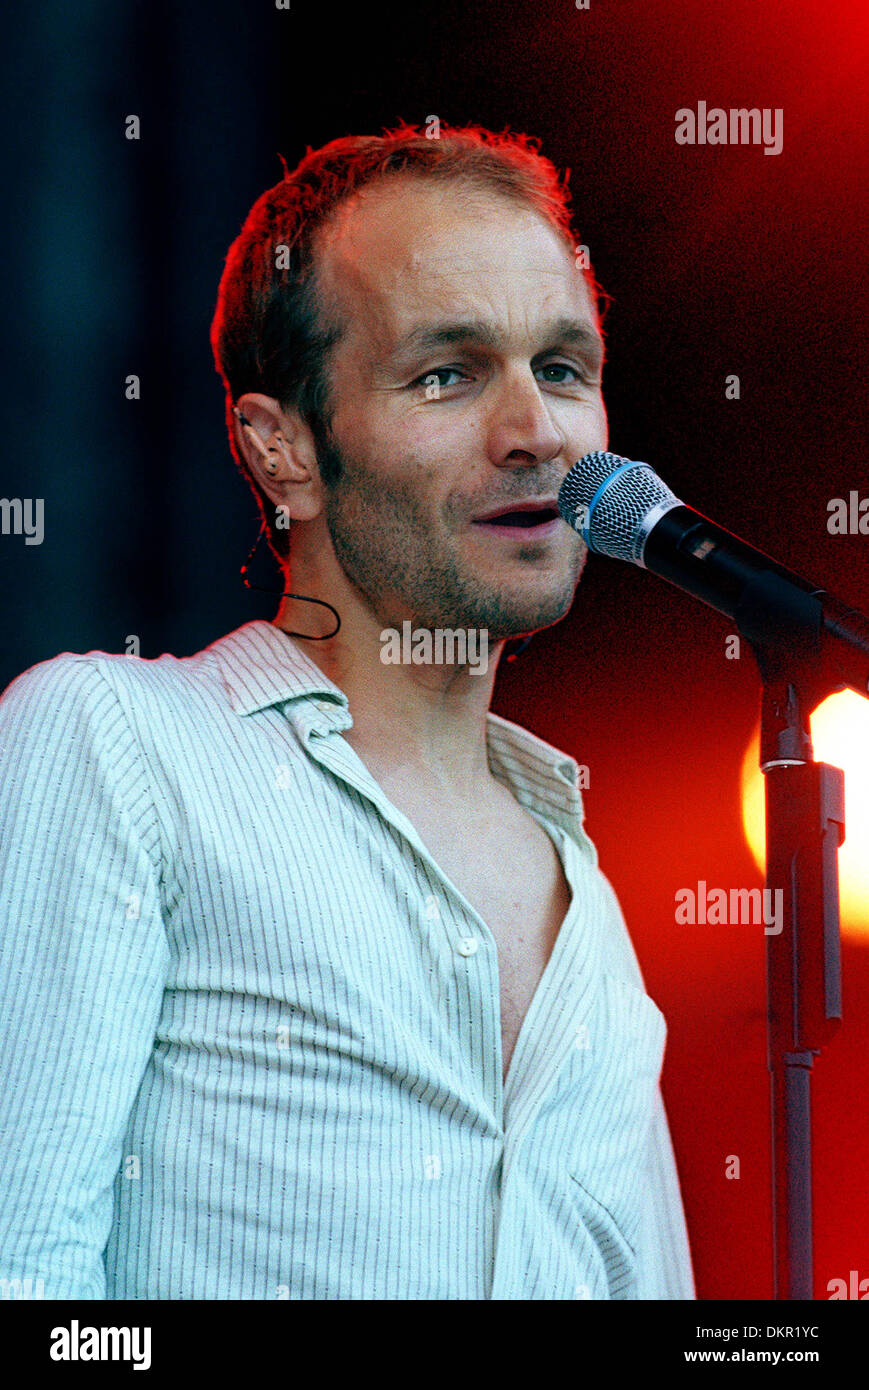 TIM SINGER WITH ''JAMES''.ND.T IN THE PARK, SCOTLA.07/07/2001.BQ44G19C.Â Photo - Alamy